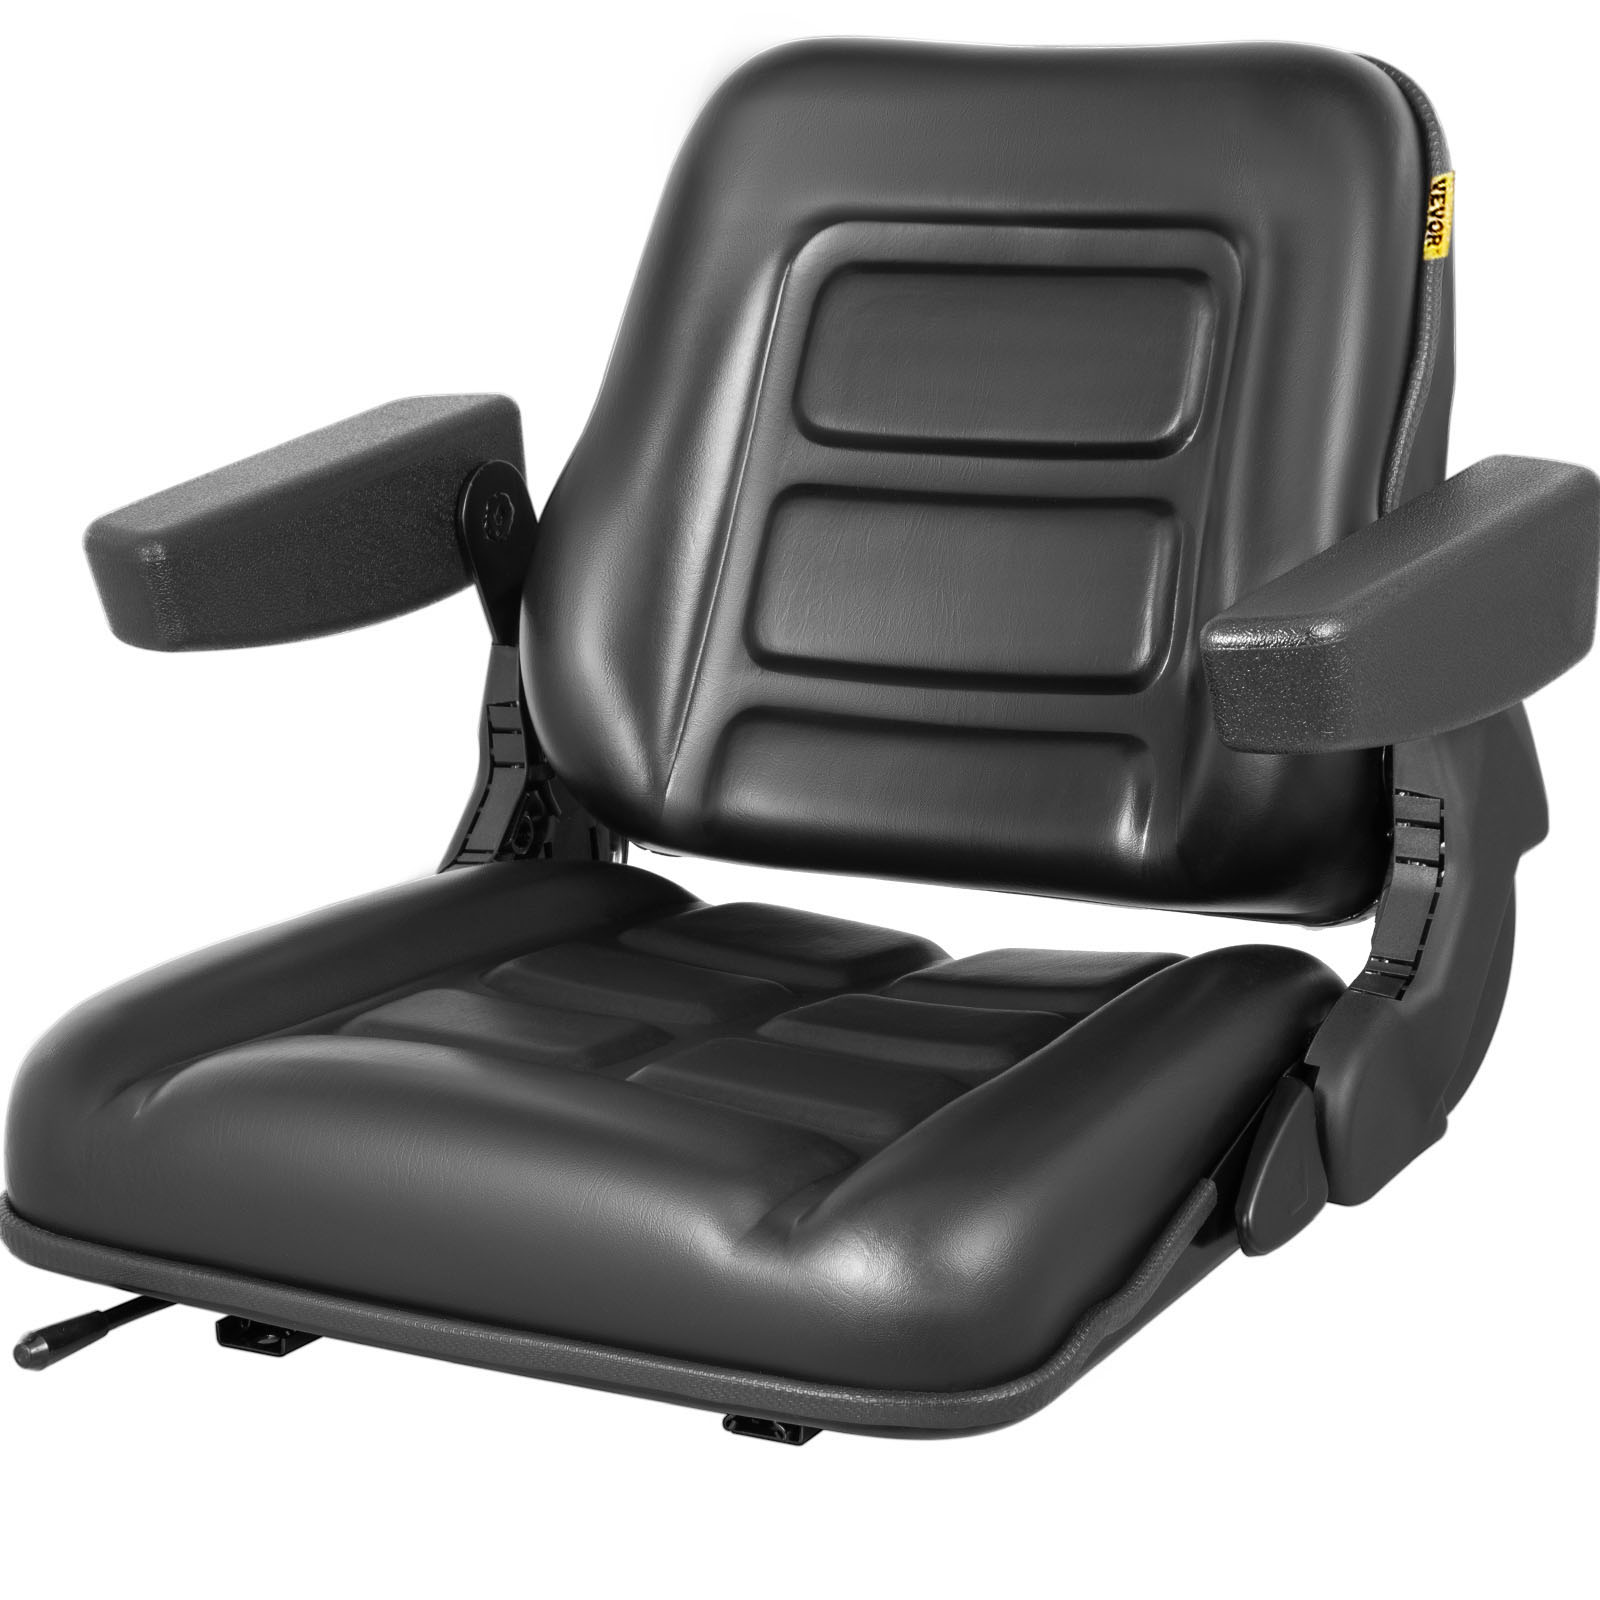 NEW FORKLIFT SEAT VINYL 14" X 19.5 X 18" 